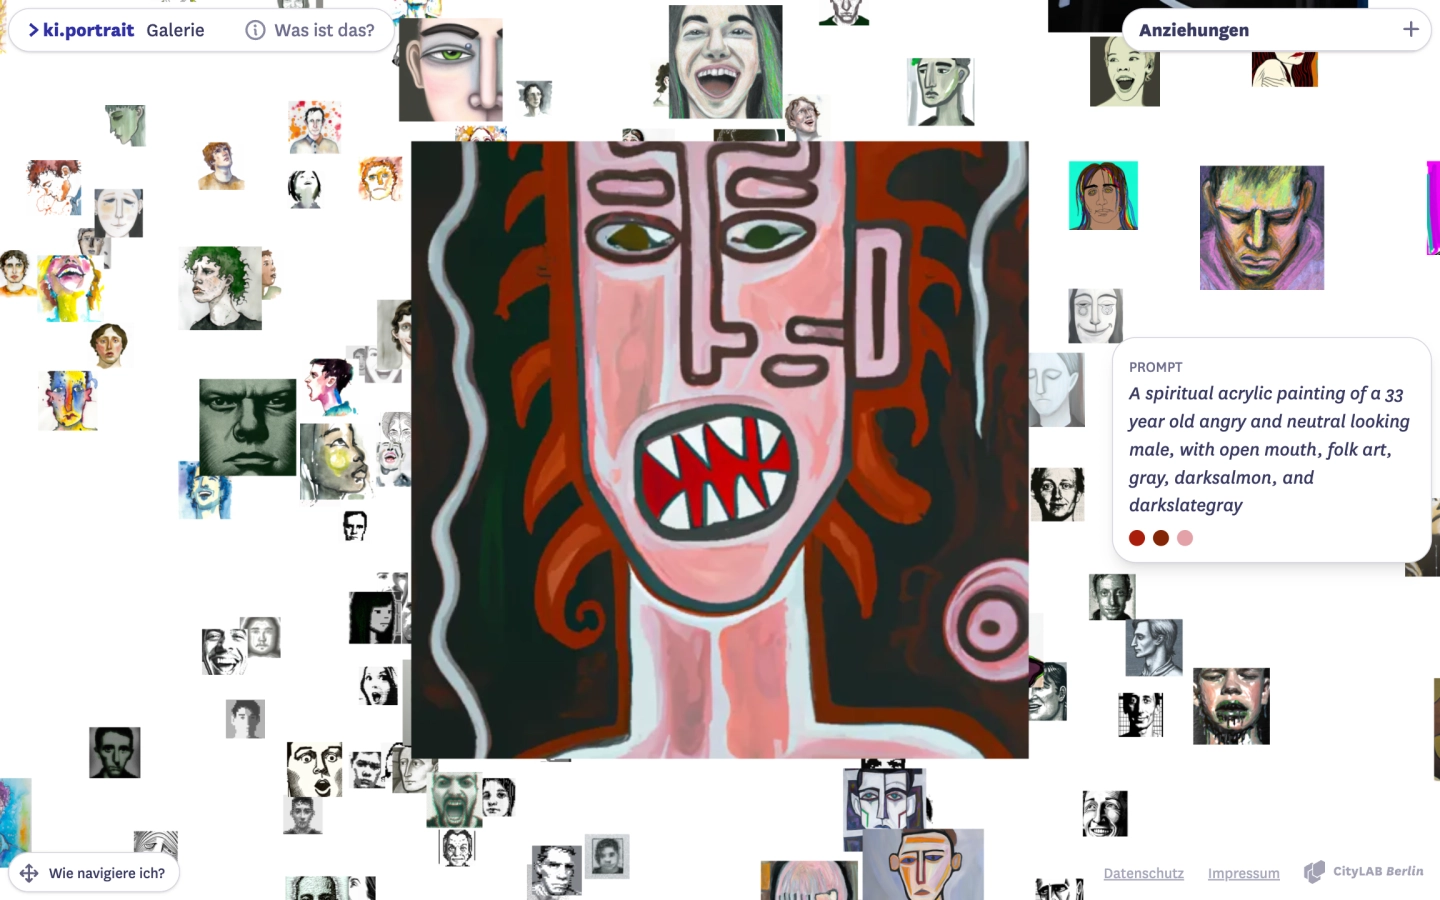 Screenshot of the project ki.portrait Gallery